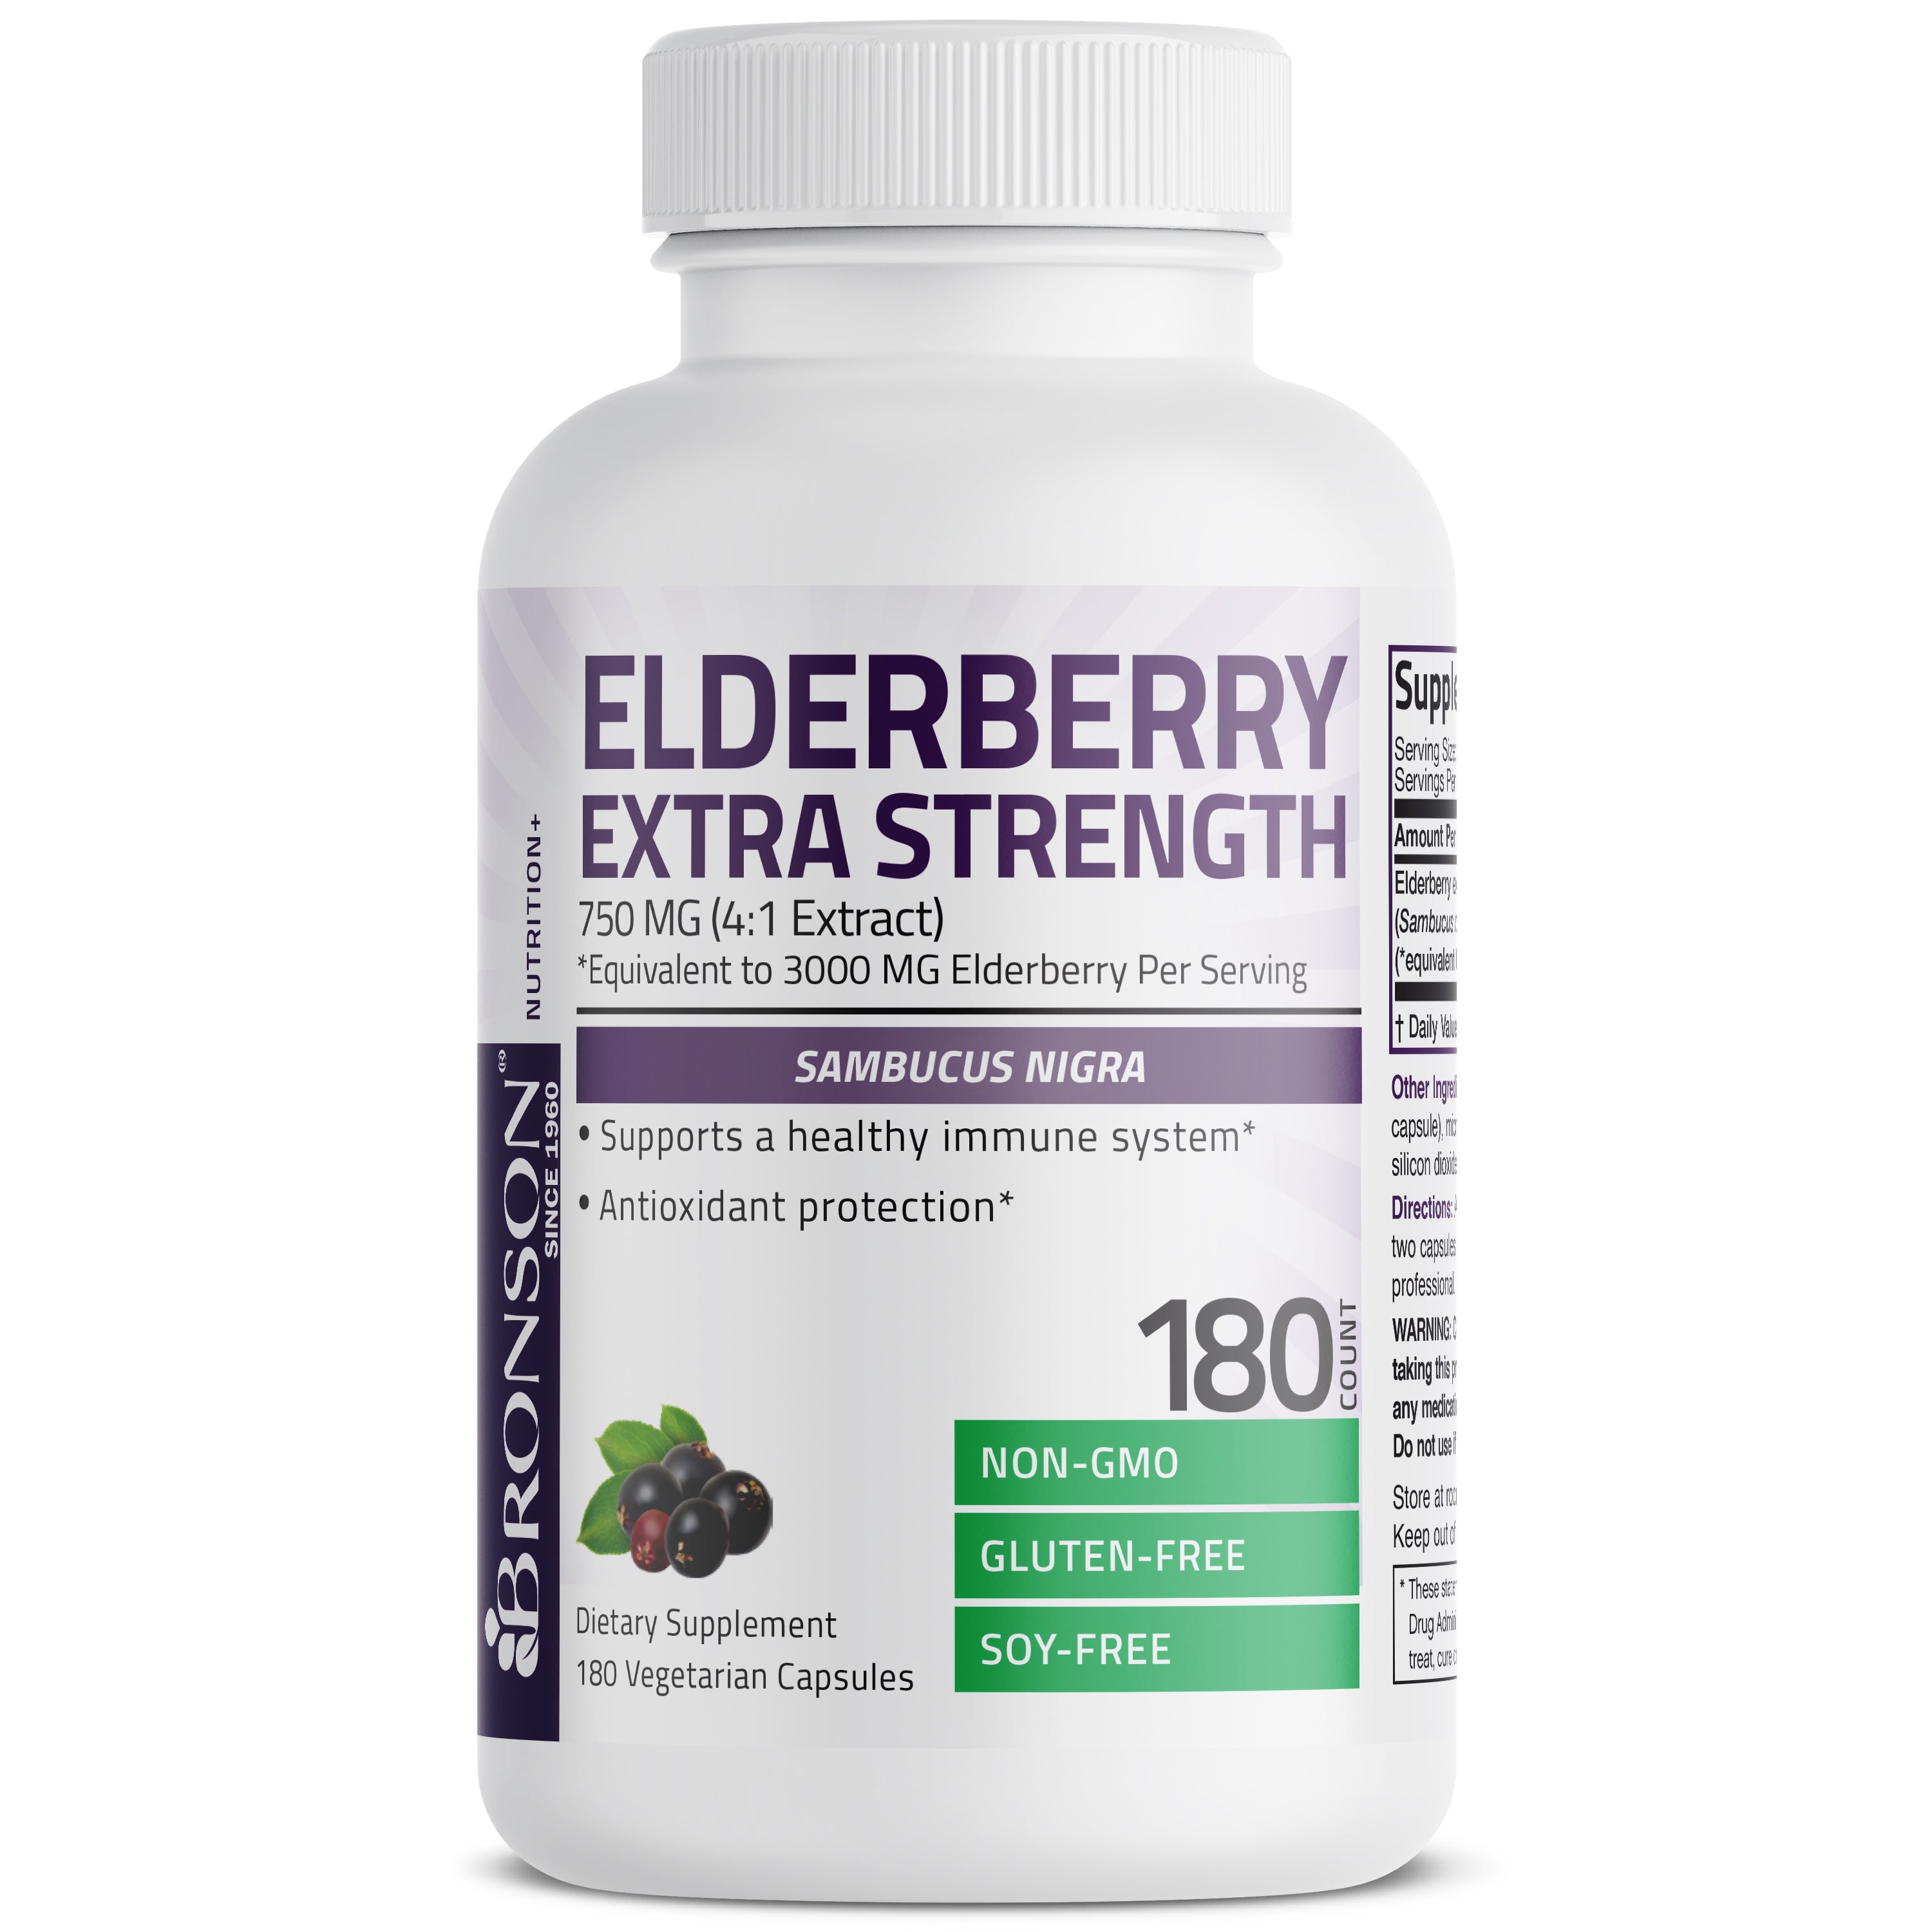 Elderberry Extra Strength - 3,000 mg - 180 Vegetarian Capsules view 2 of 7